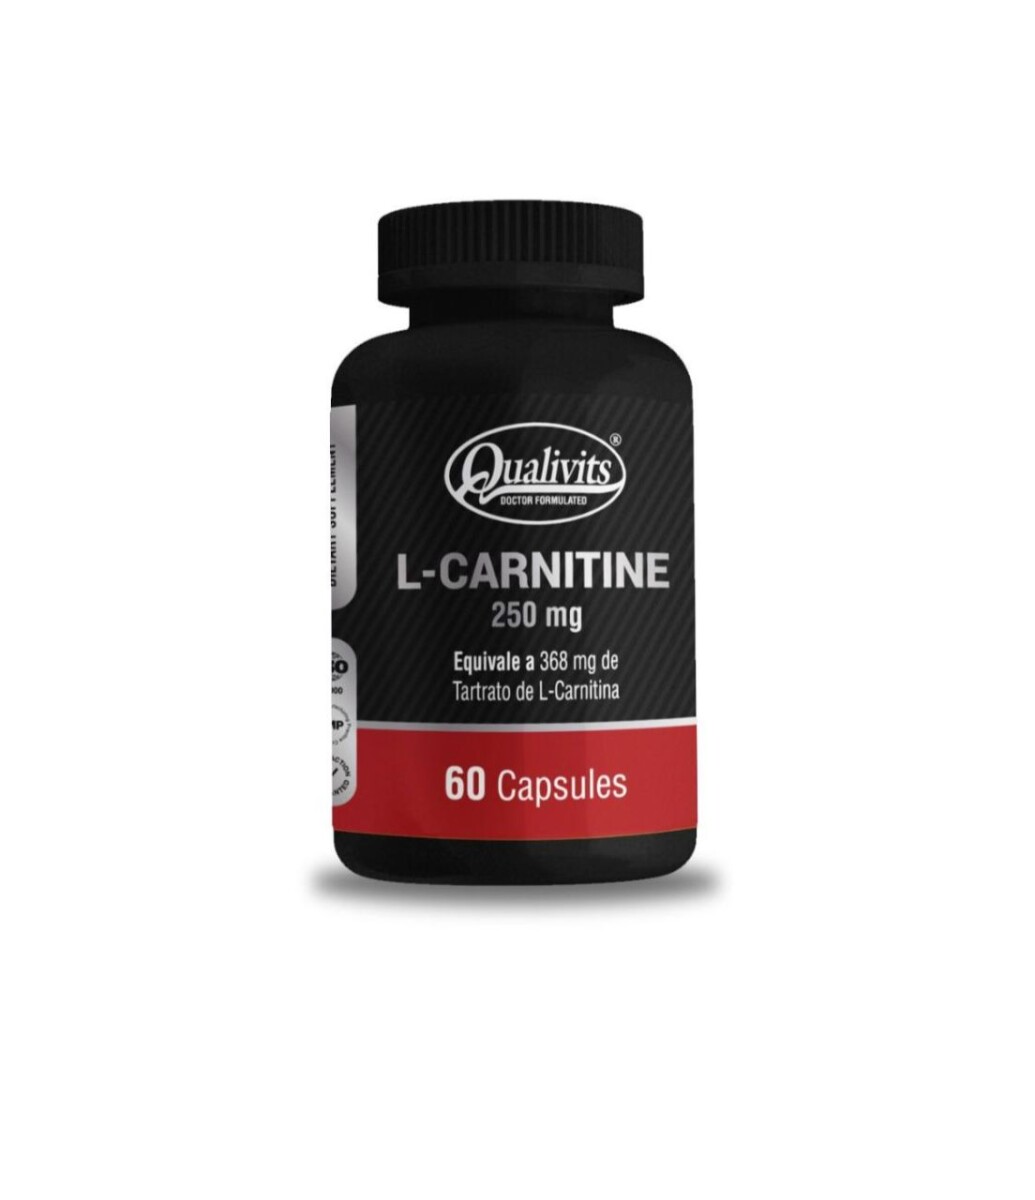 Qualivits L-carnitine 250mg - 60 cap 